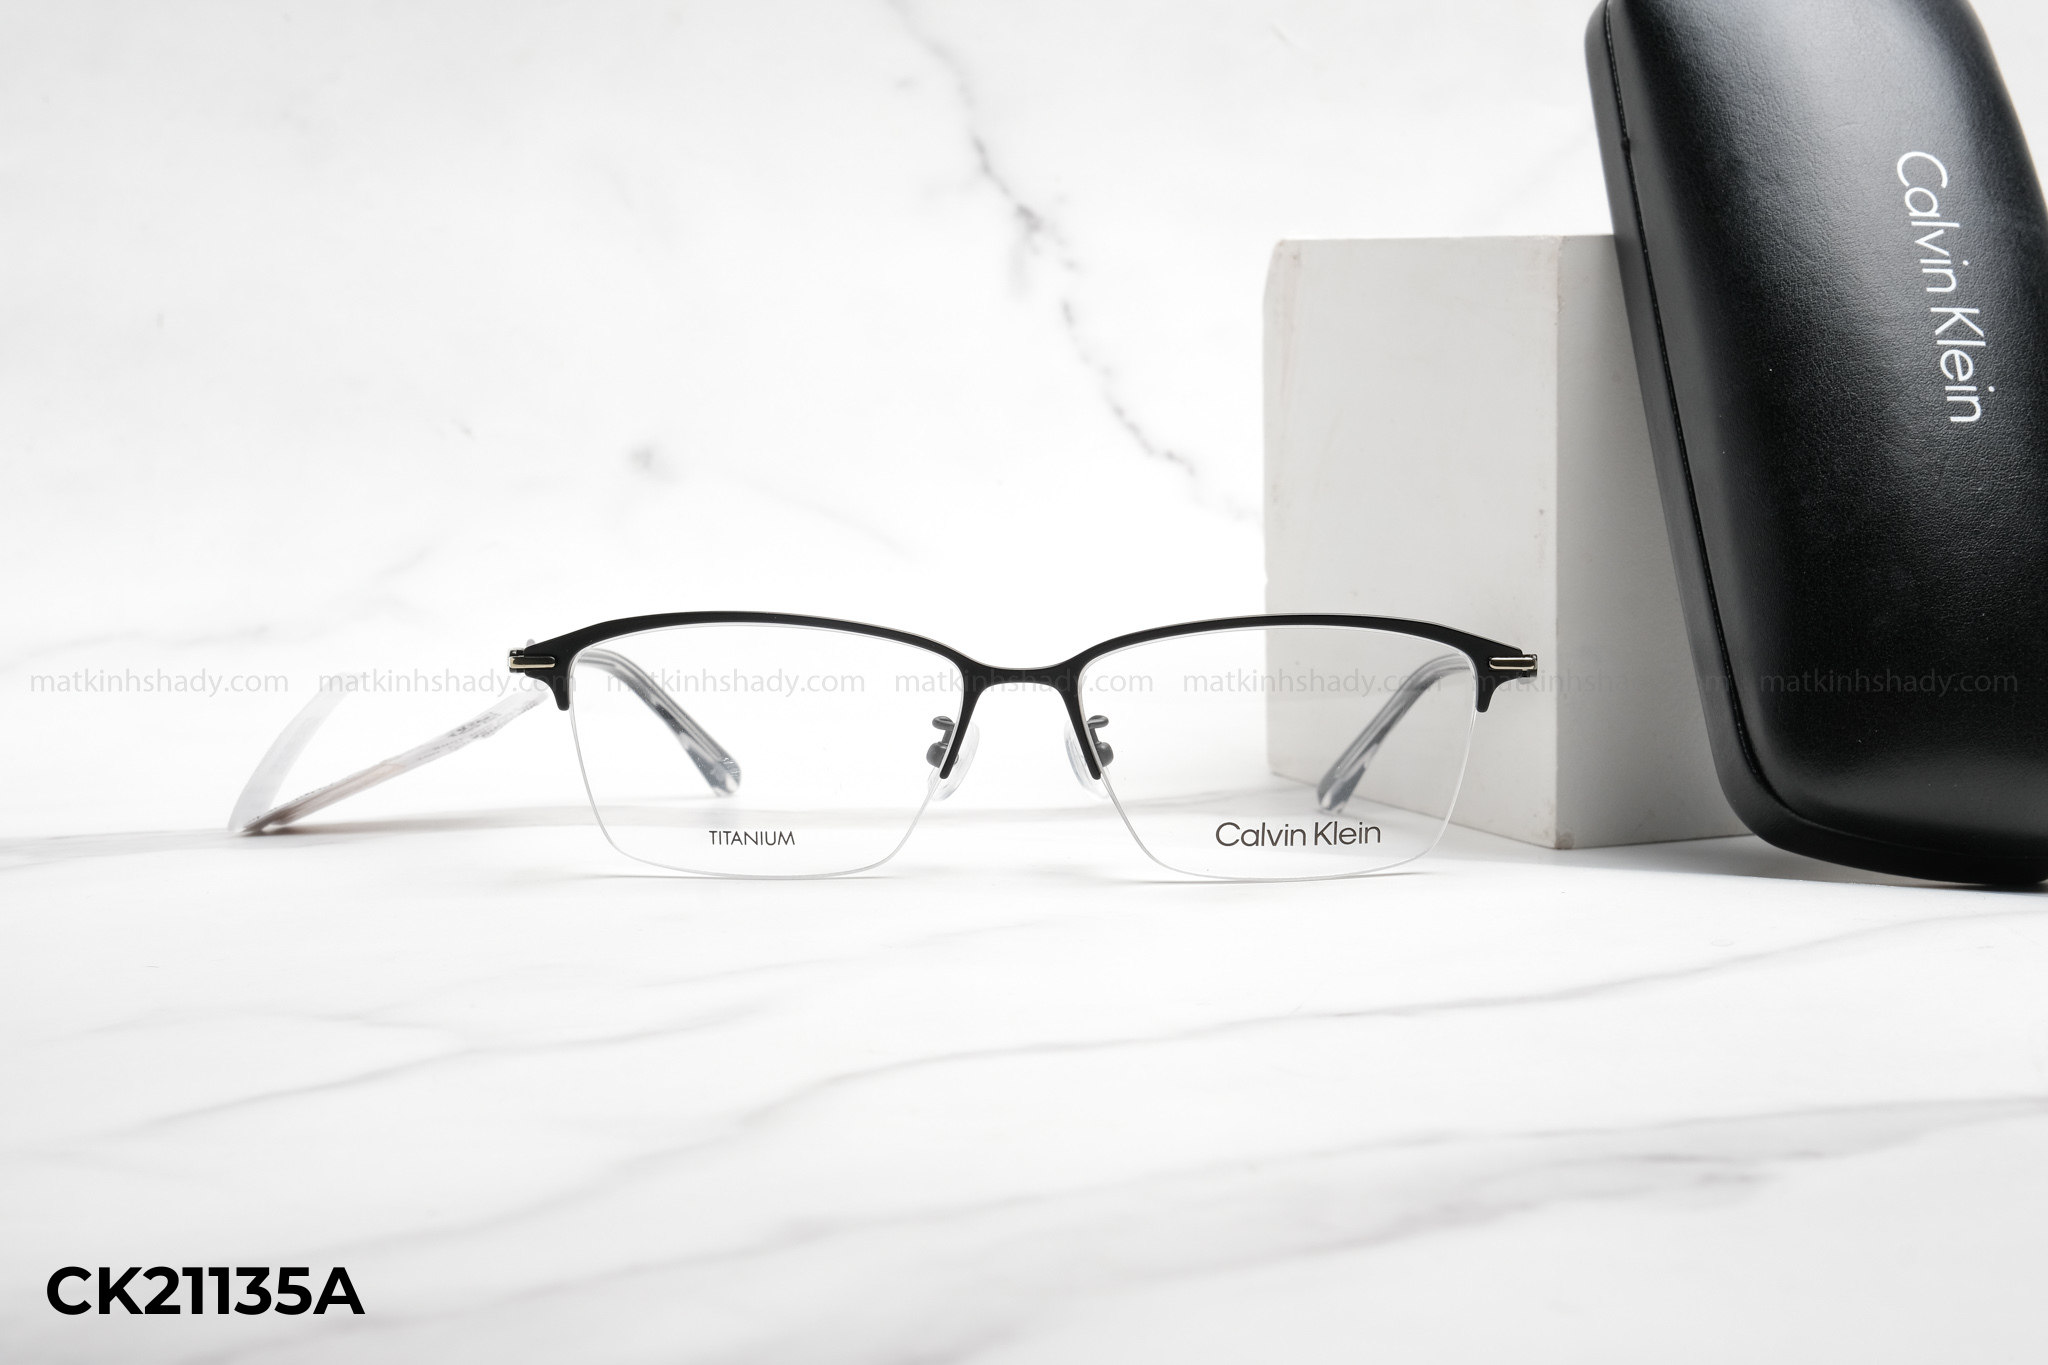  Calvin Klein Eyewear - Glasses - CK21135A 